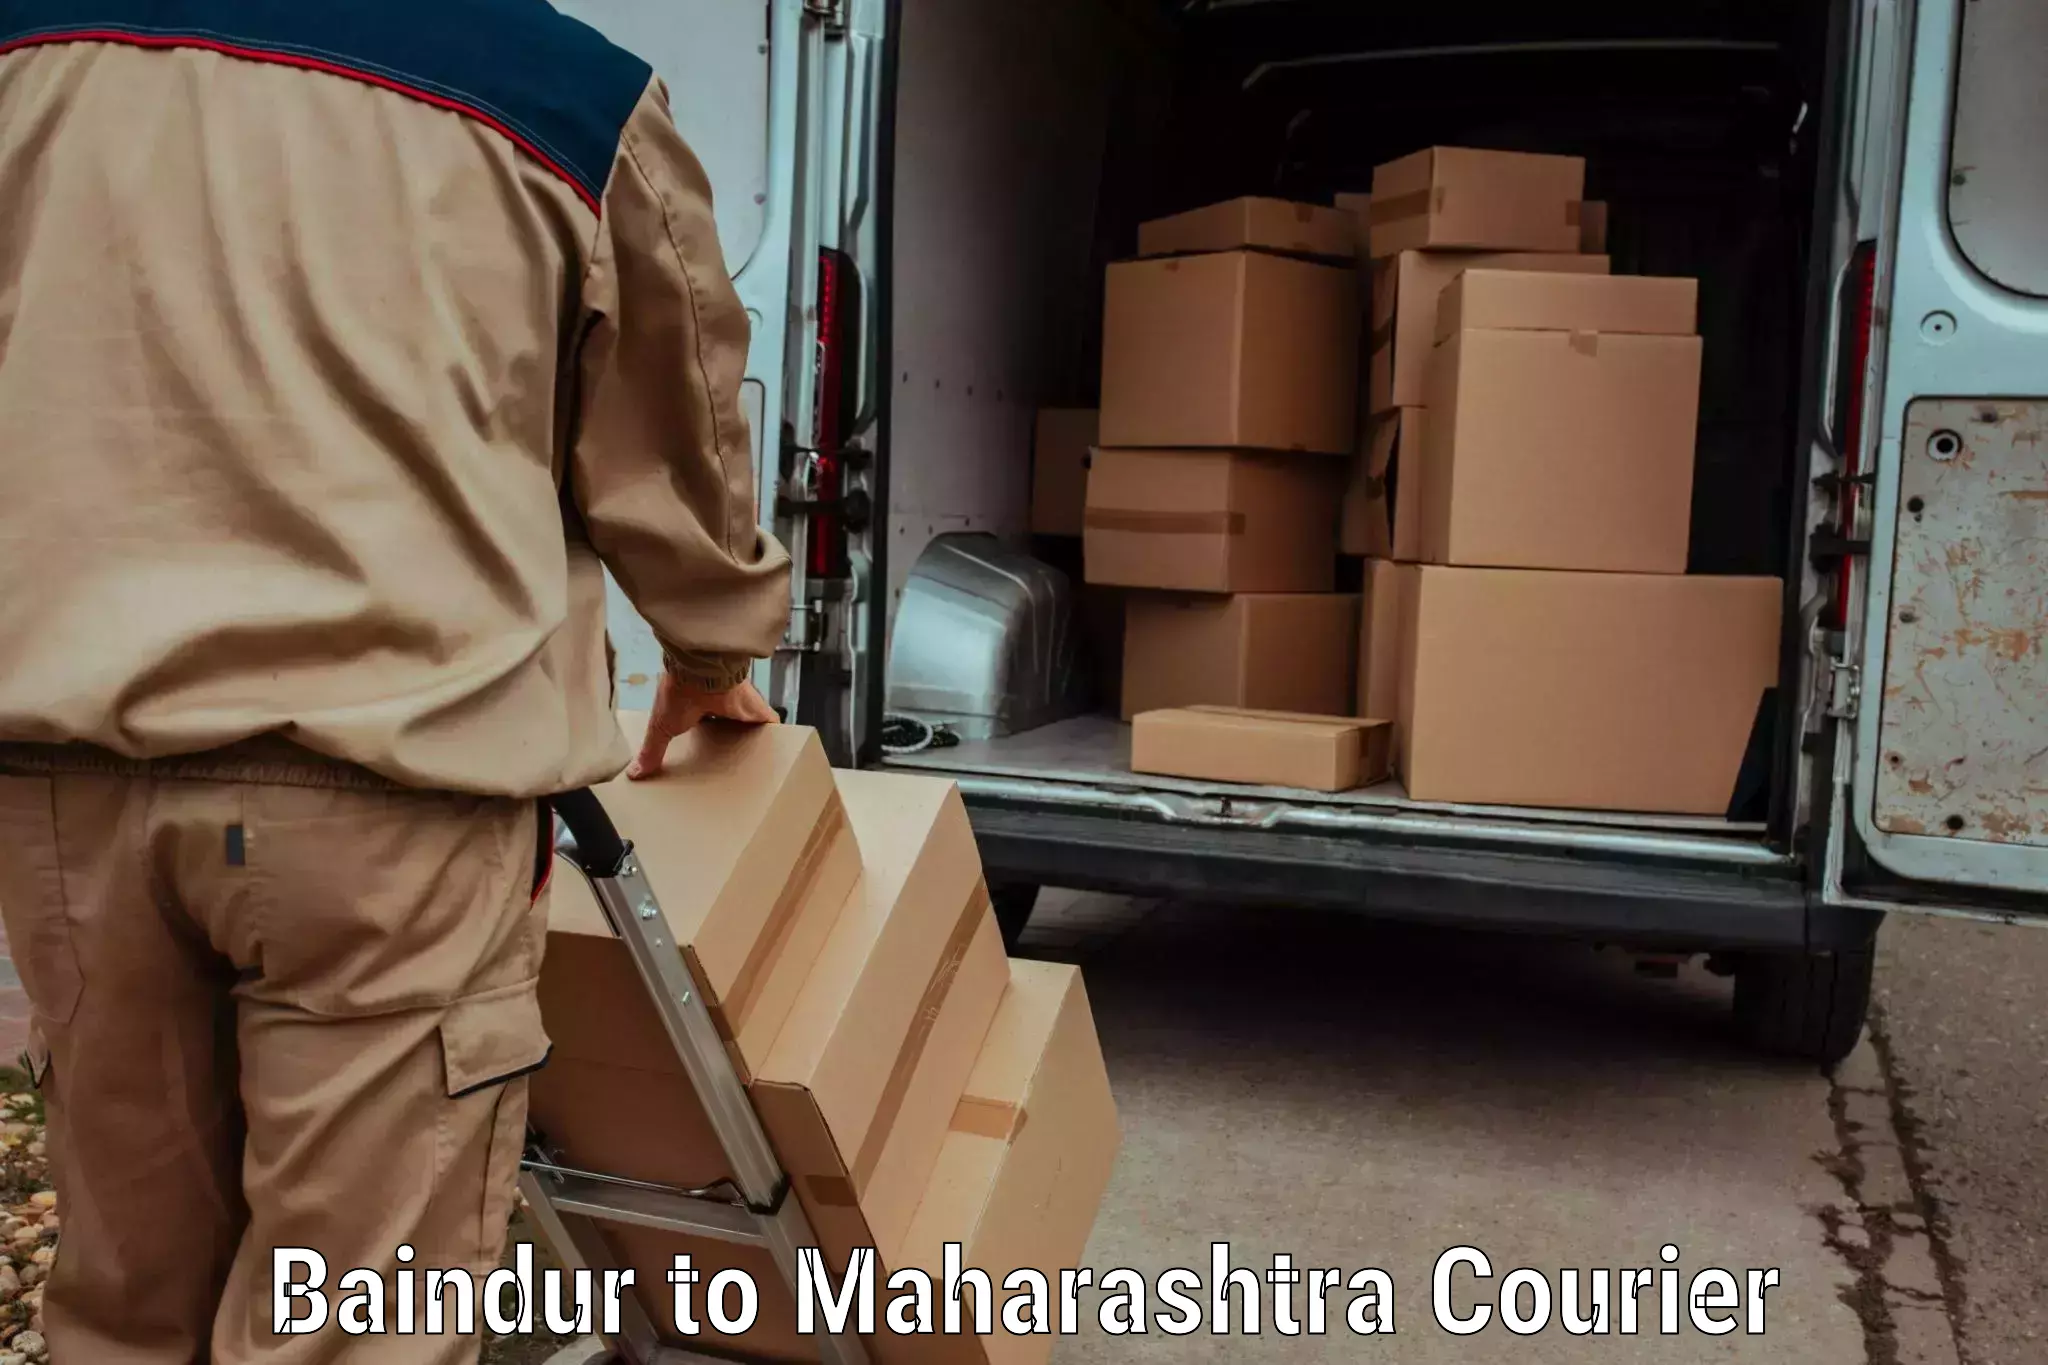 Doorstep luggage pickup in Baindur to Maharashtra